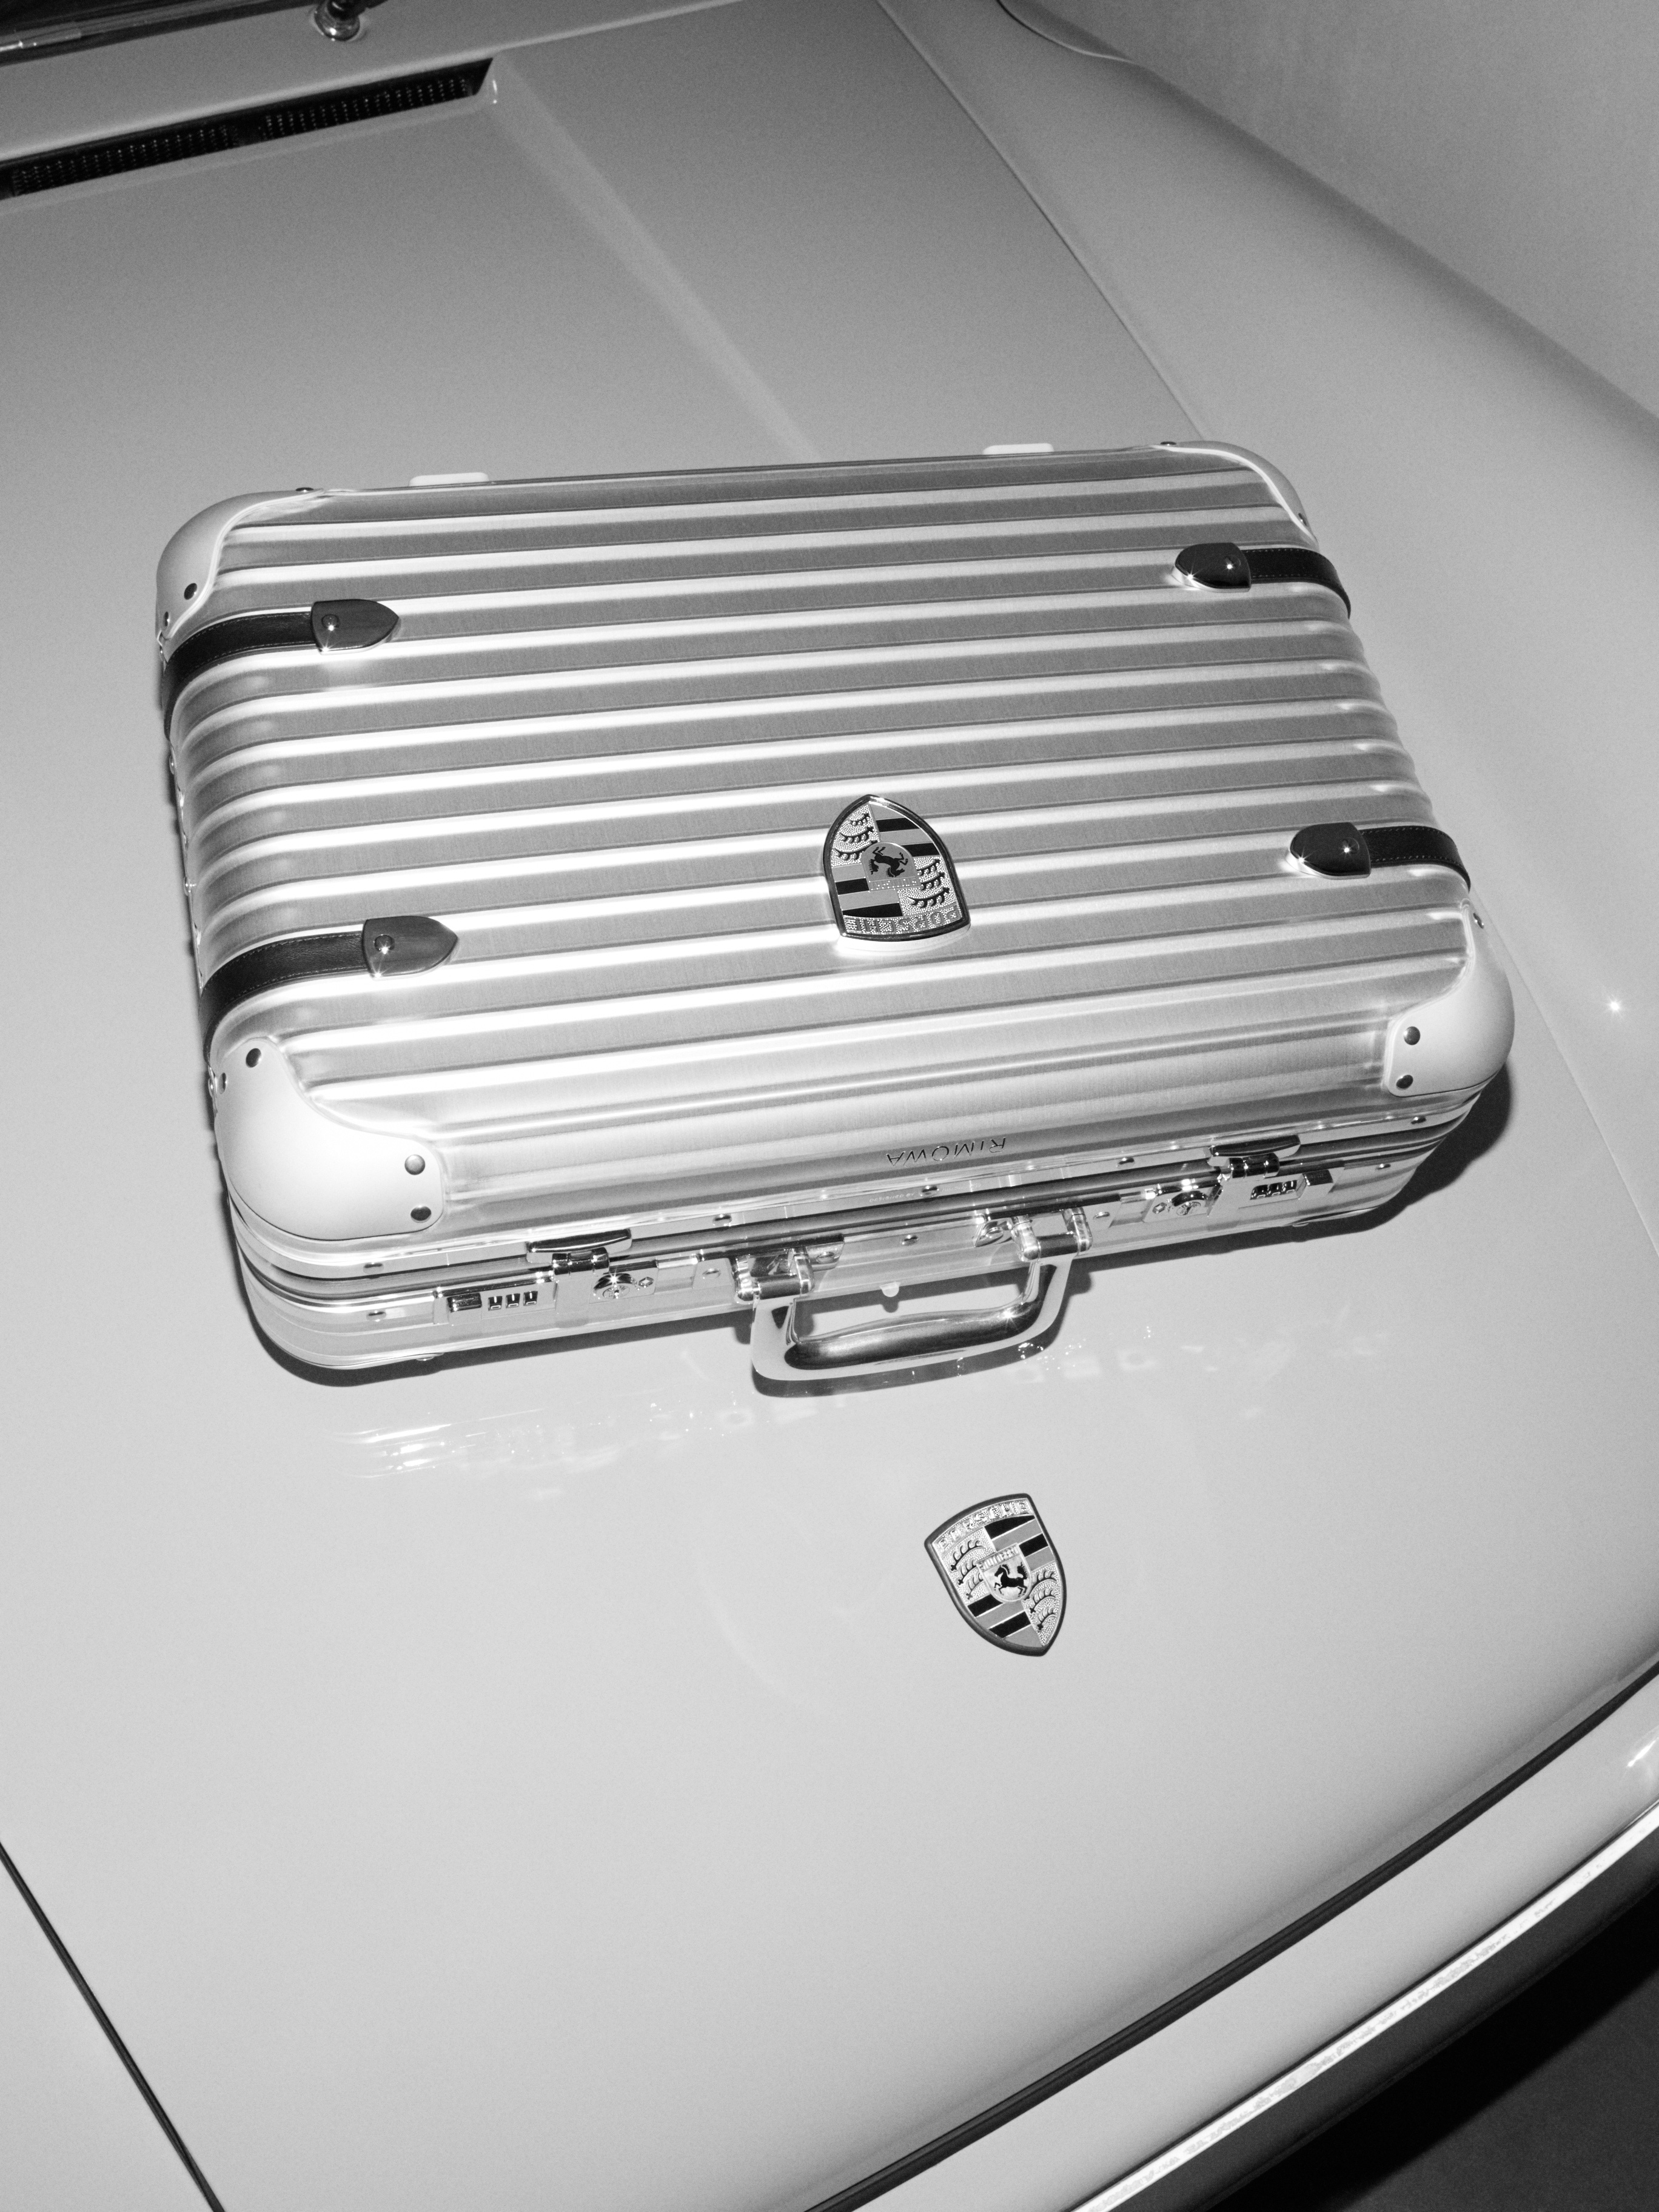 RIMOWA x Porsche Hand-Carry Case Pepita on hood of 911